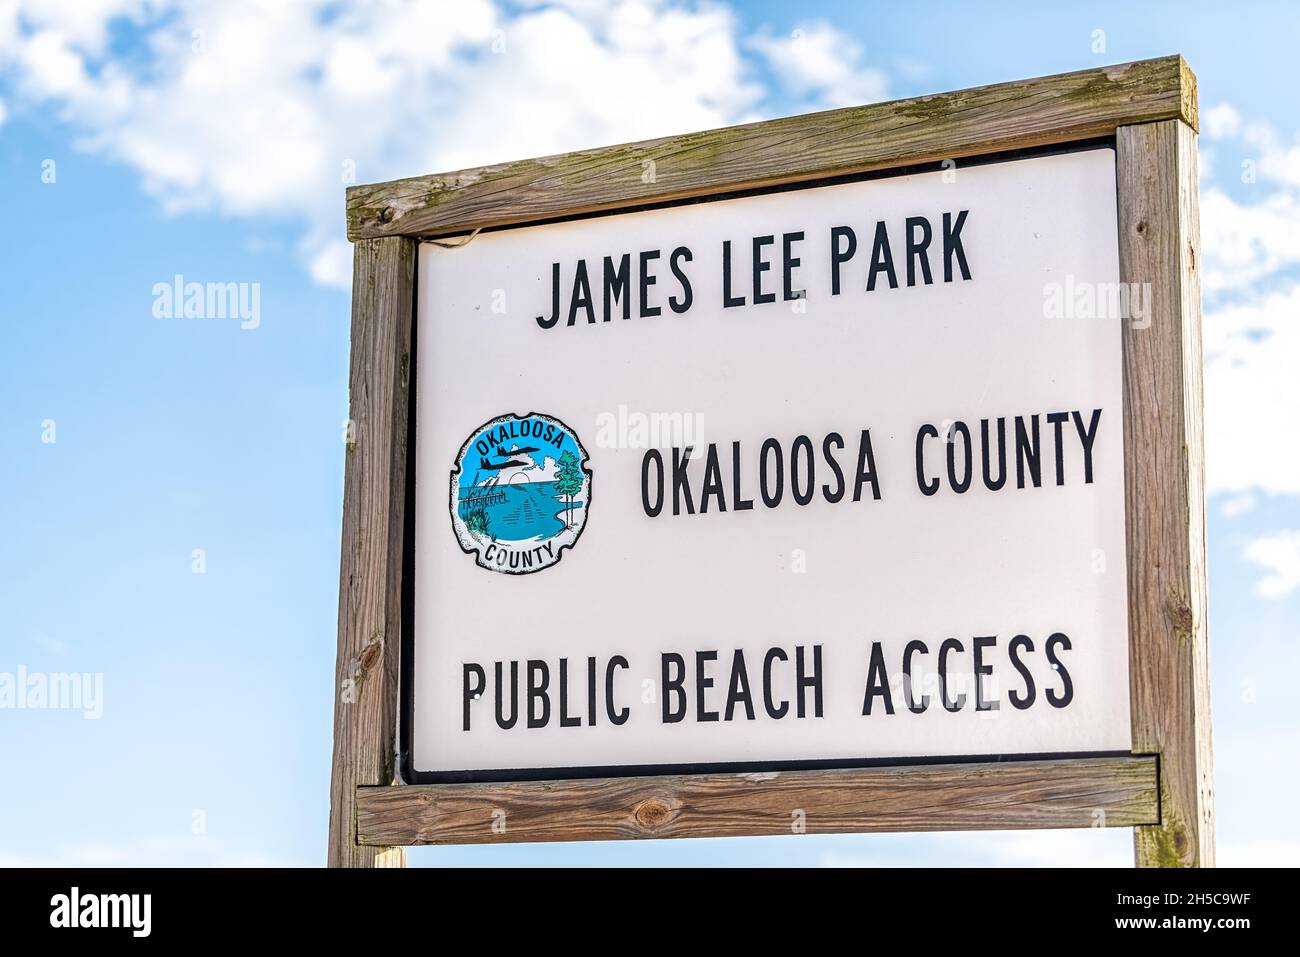 Fort Walton Beach, USA - 13. Januar 2021: Okaloosa Island County James Lee Park Public Beach Access in Florida Panhandle Golf von Mexiko Nahaufnahme blau Stockfoto